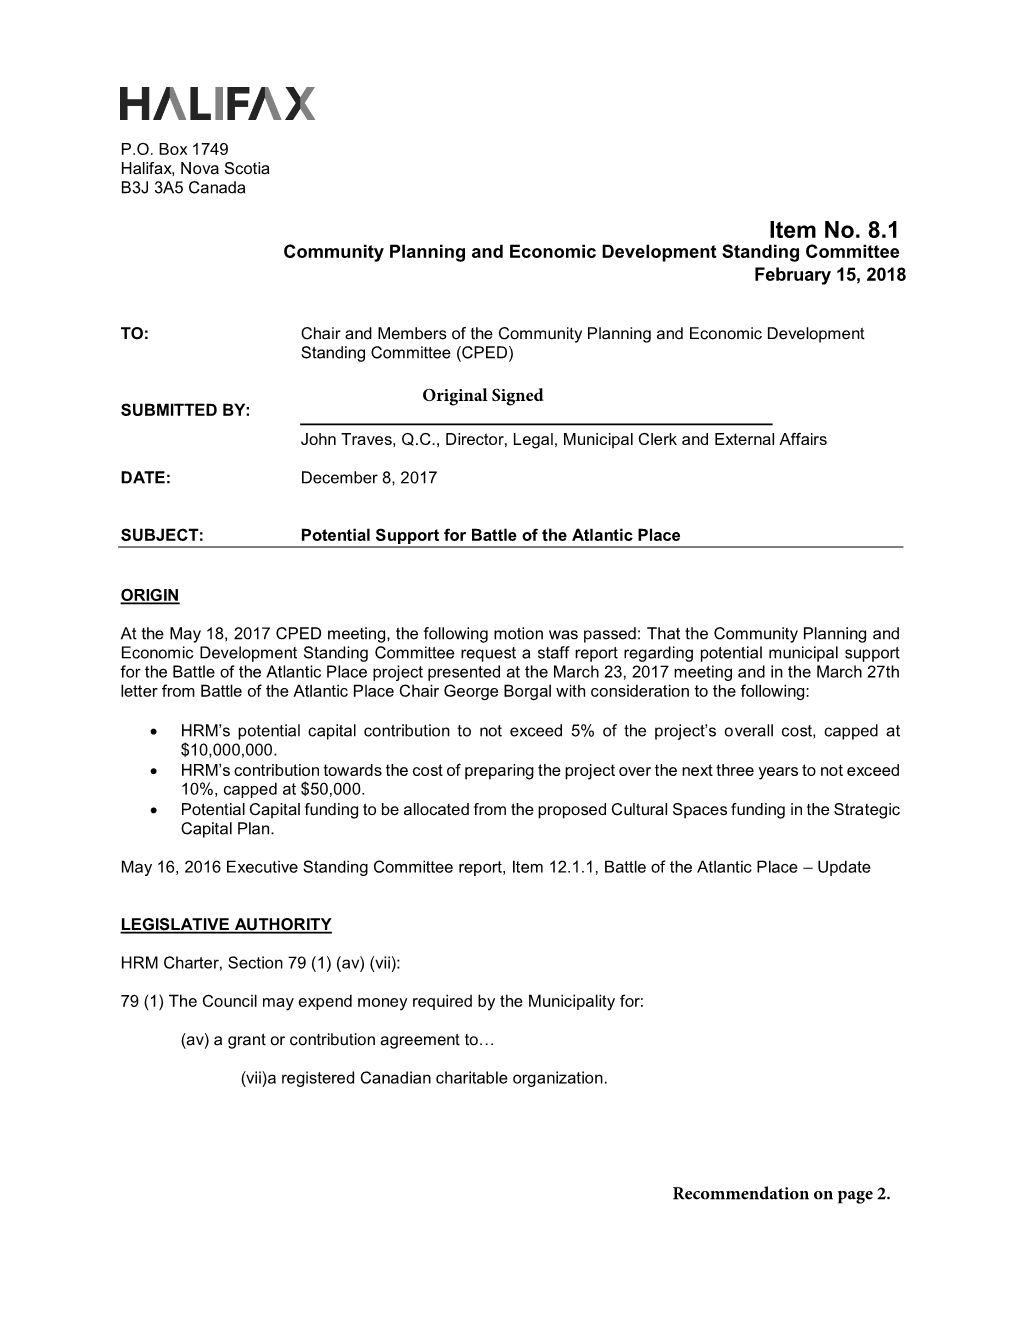 Item No. 8.1 Community Planning and Economic Development Standing Committee February 15, 2018